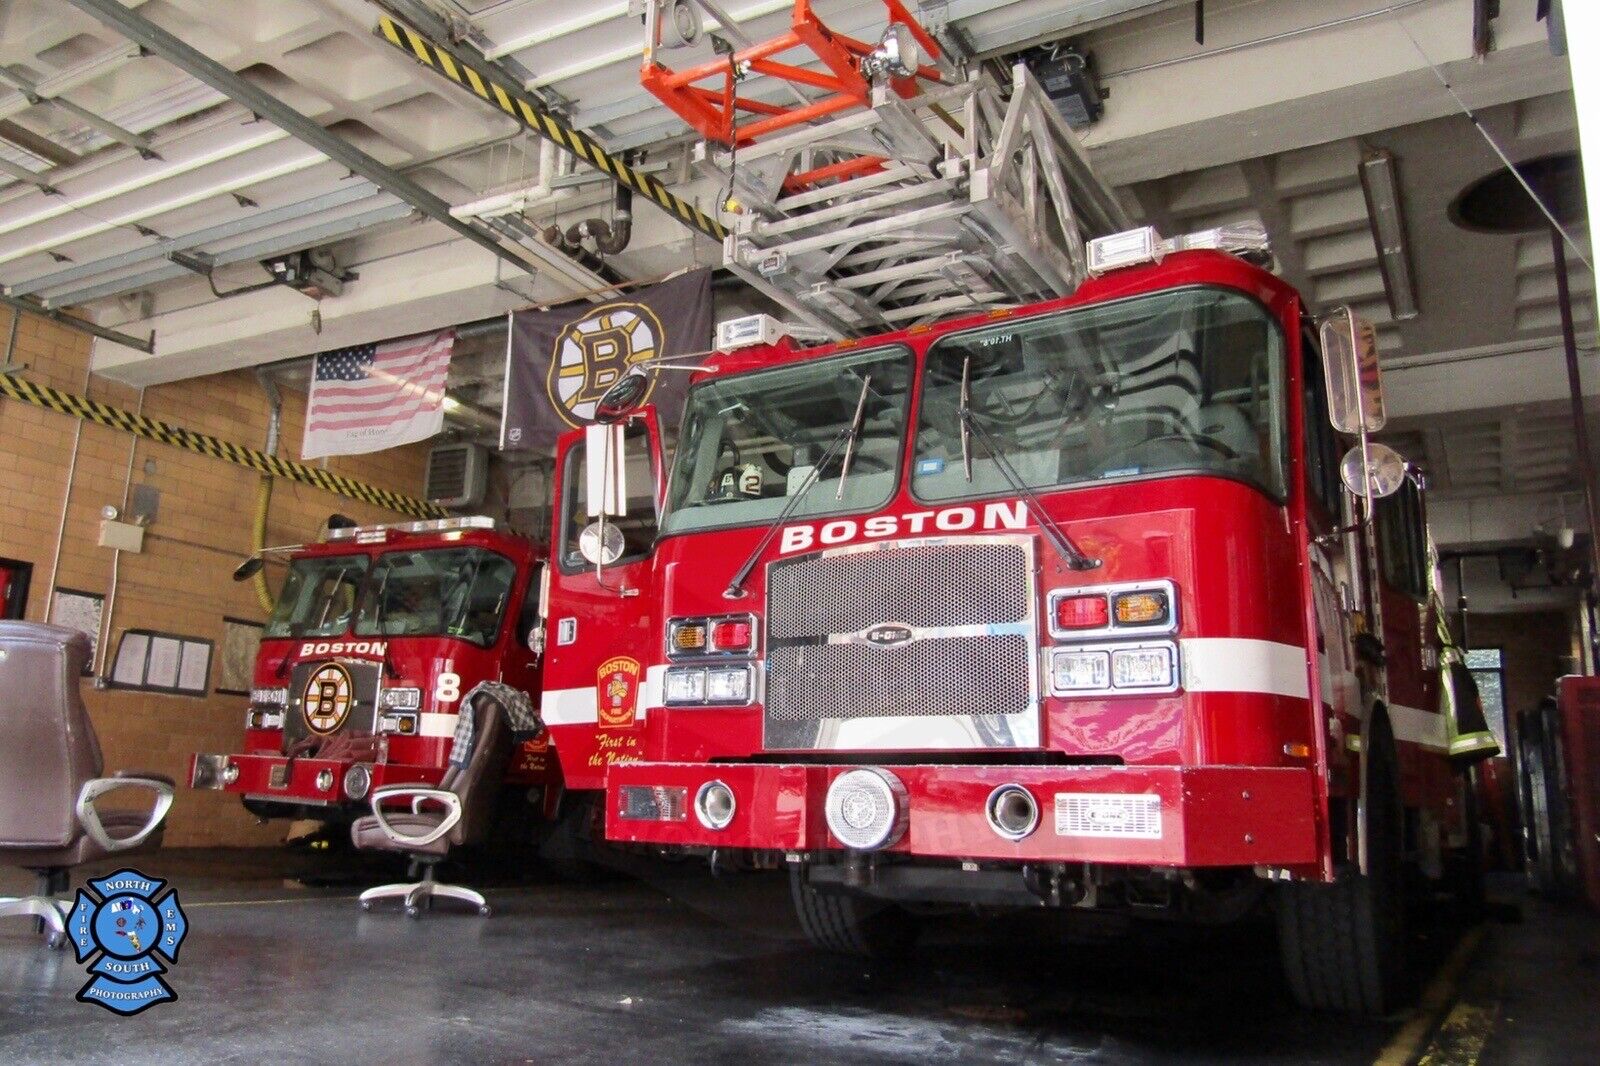 Boston Fire Dept North End Firehouse Engine 8 8x12” Photo Print Firefighter Art